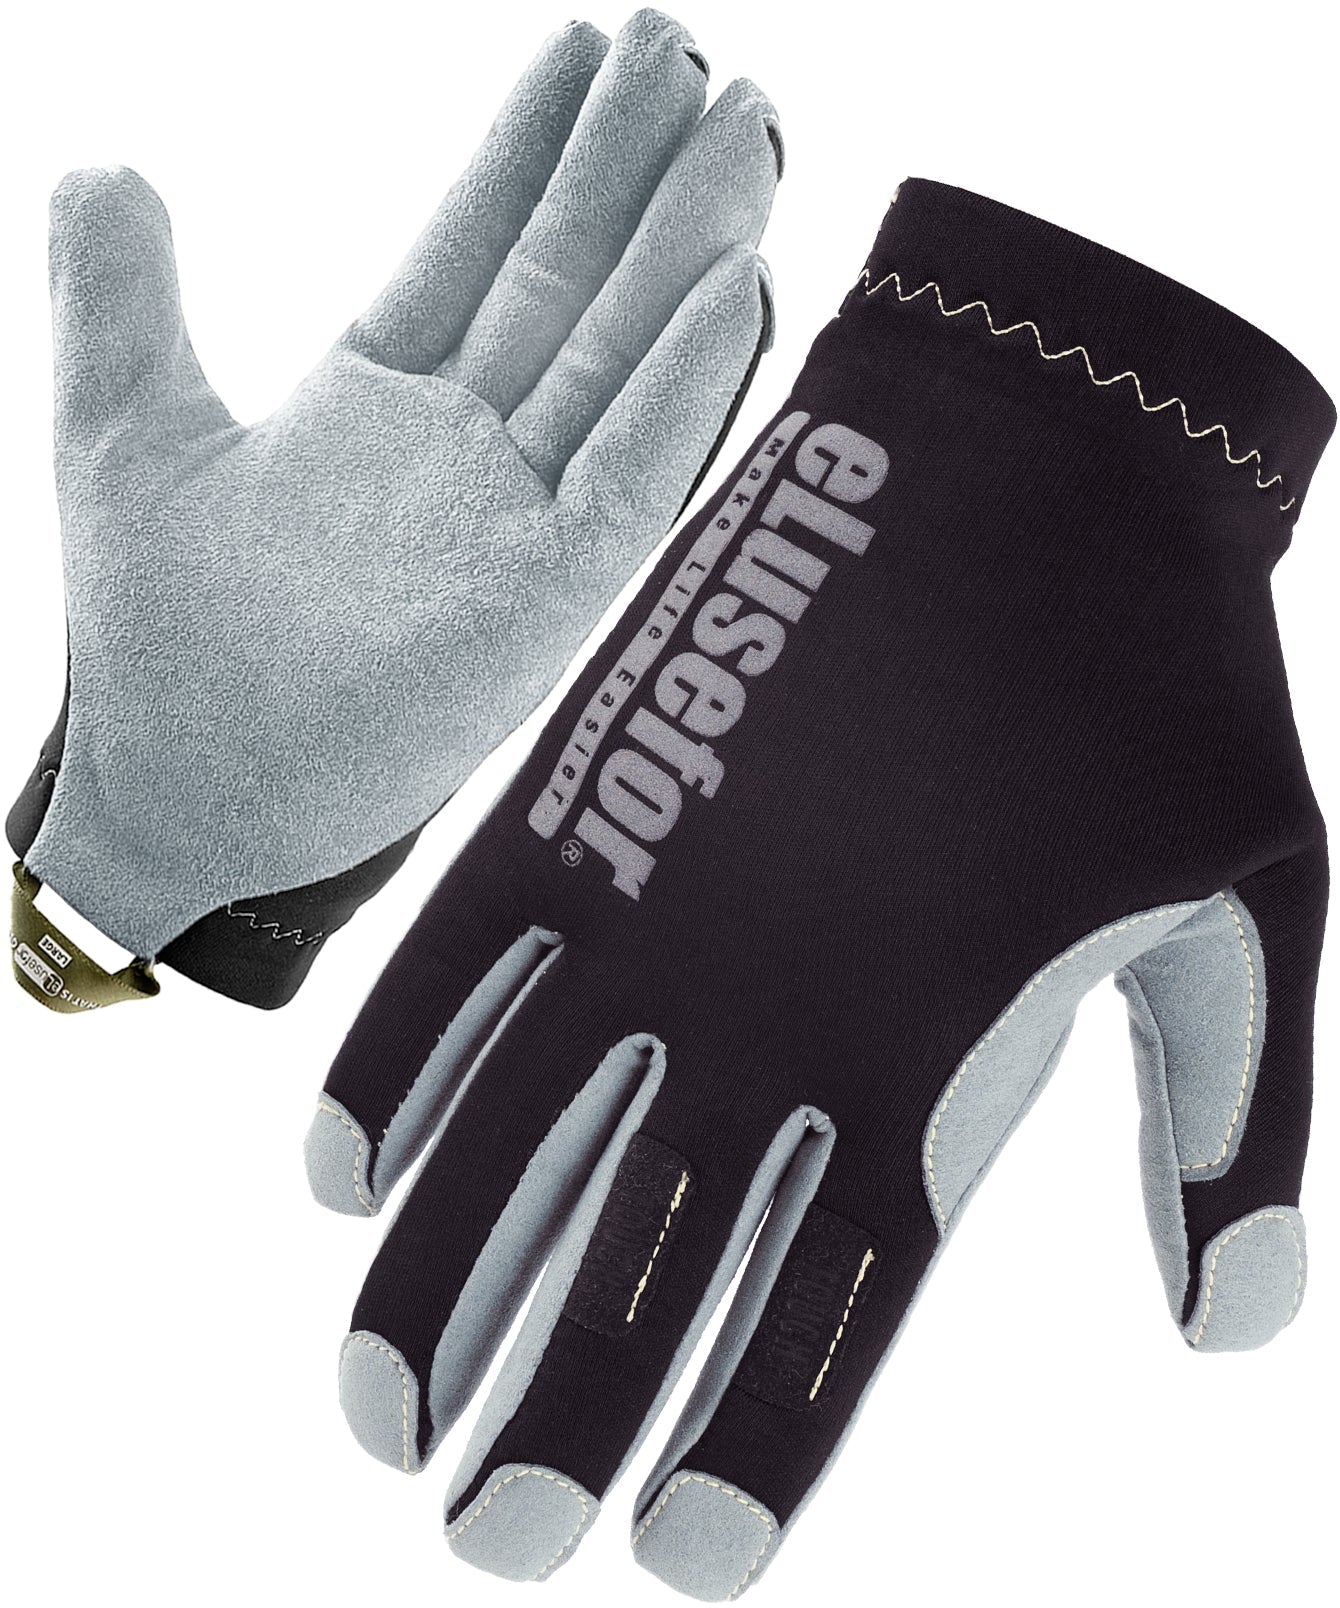 eLusefor Dexterity Mechanic Glove, Easy Fit, Mens Light Duty Safety Work Glove, Machine Wash